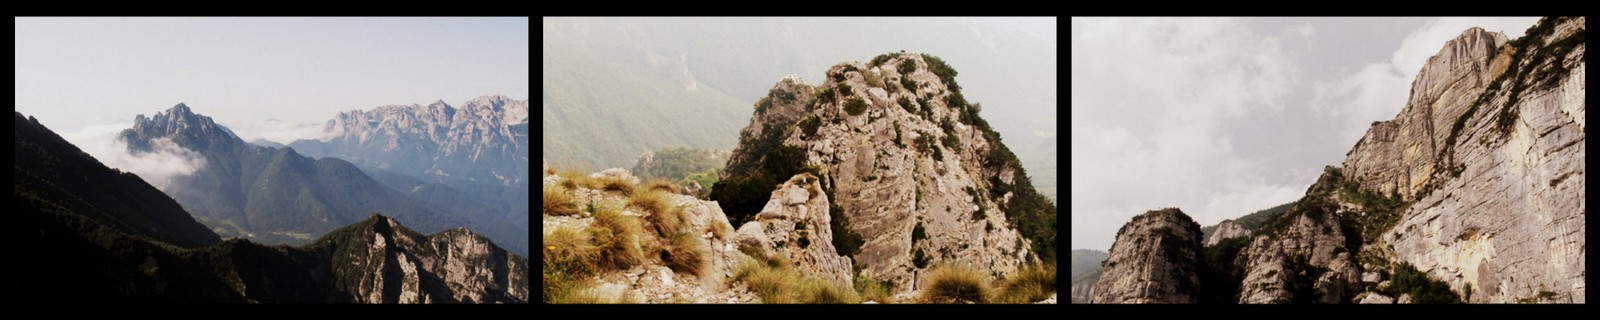 fotogrammi dal Monte Pasubio